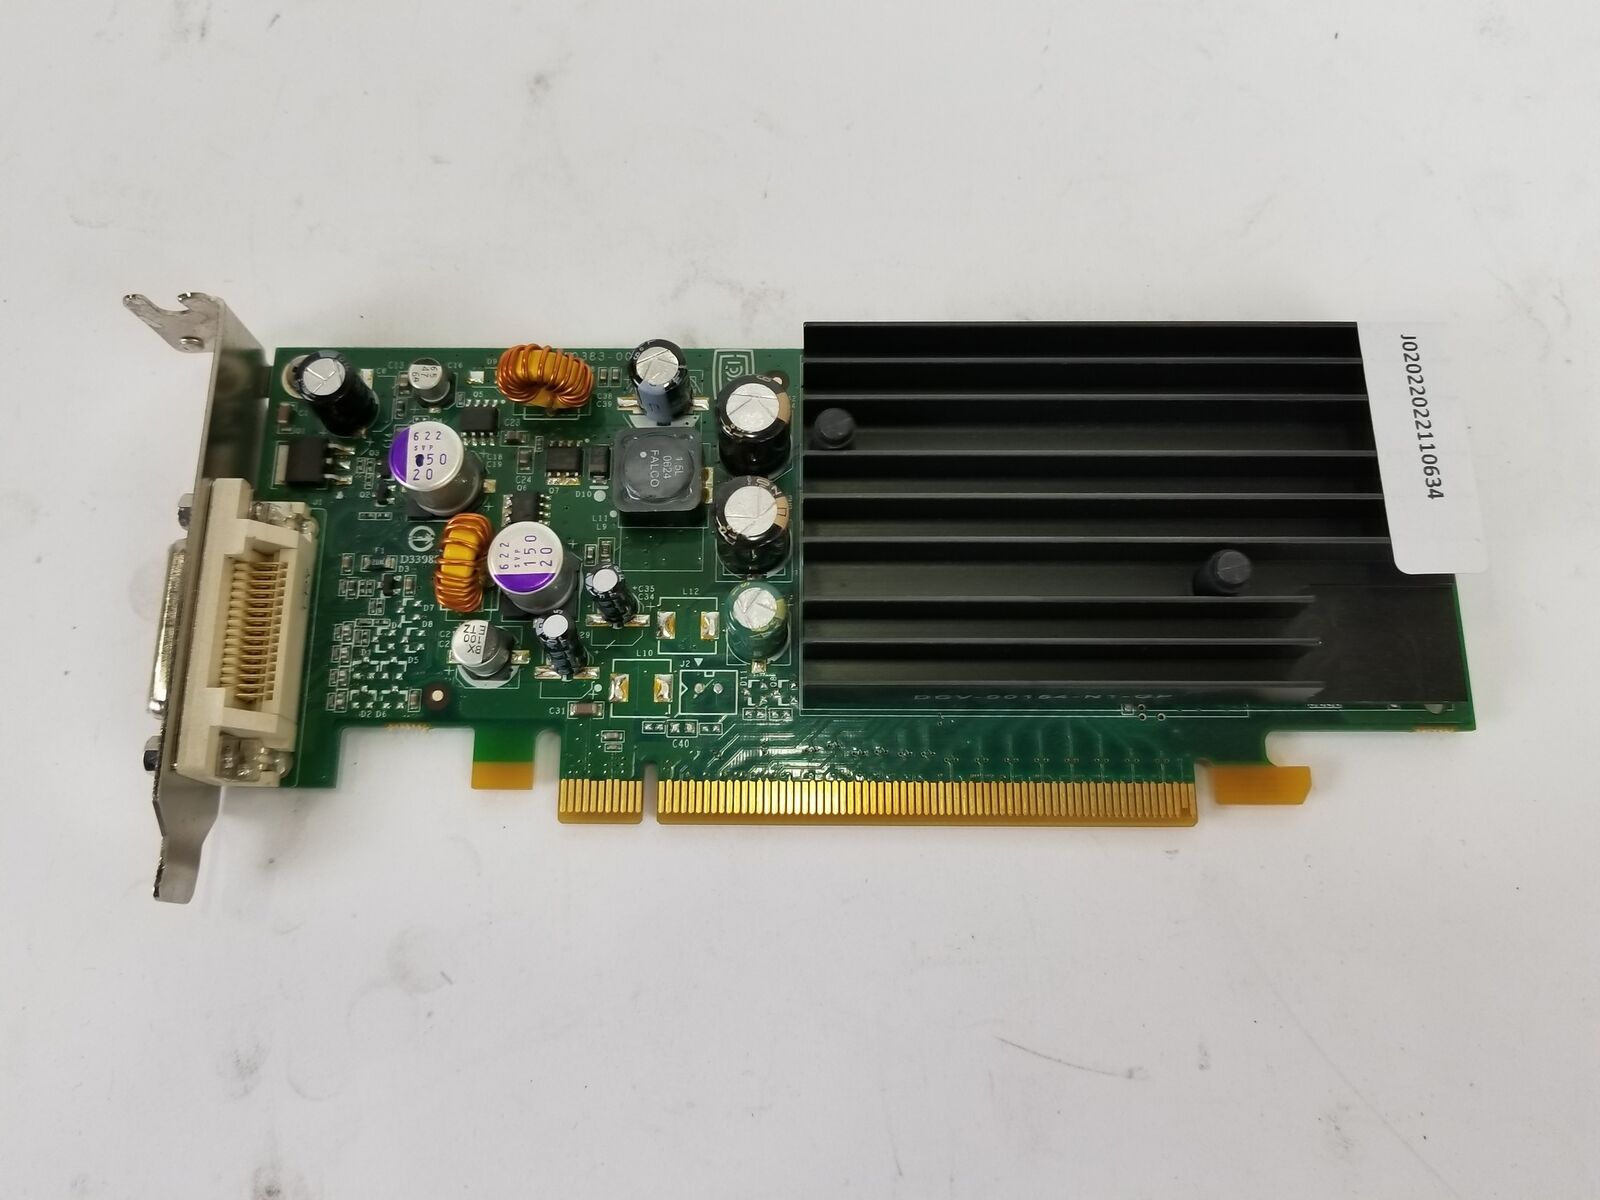 Nvidia Quadro NVS 285 128 MB DDR2 PCI Express x16 Low Profile Desktop Video Card